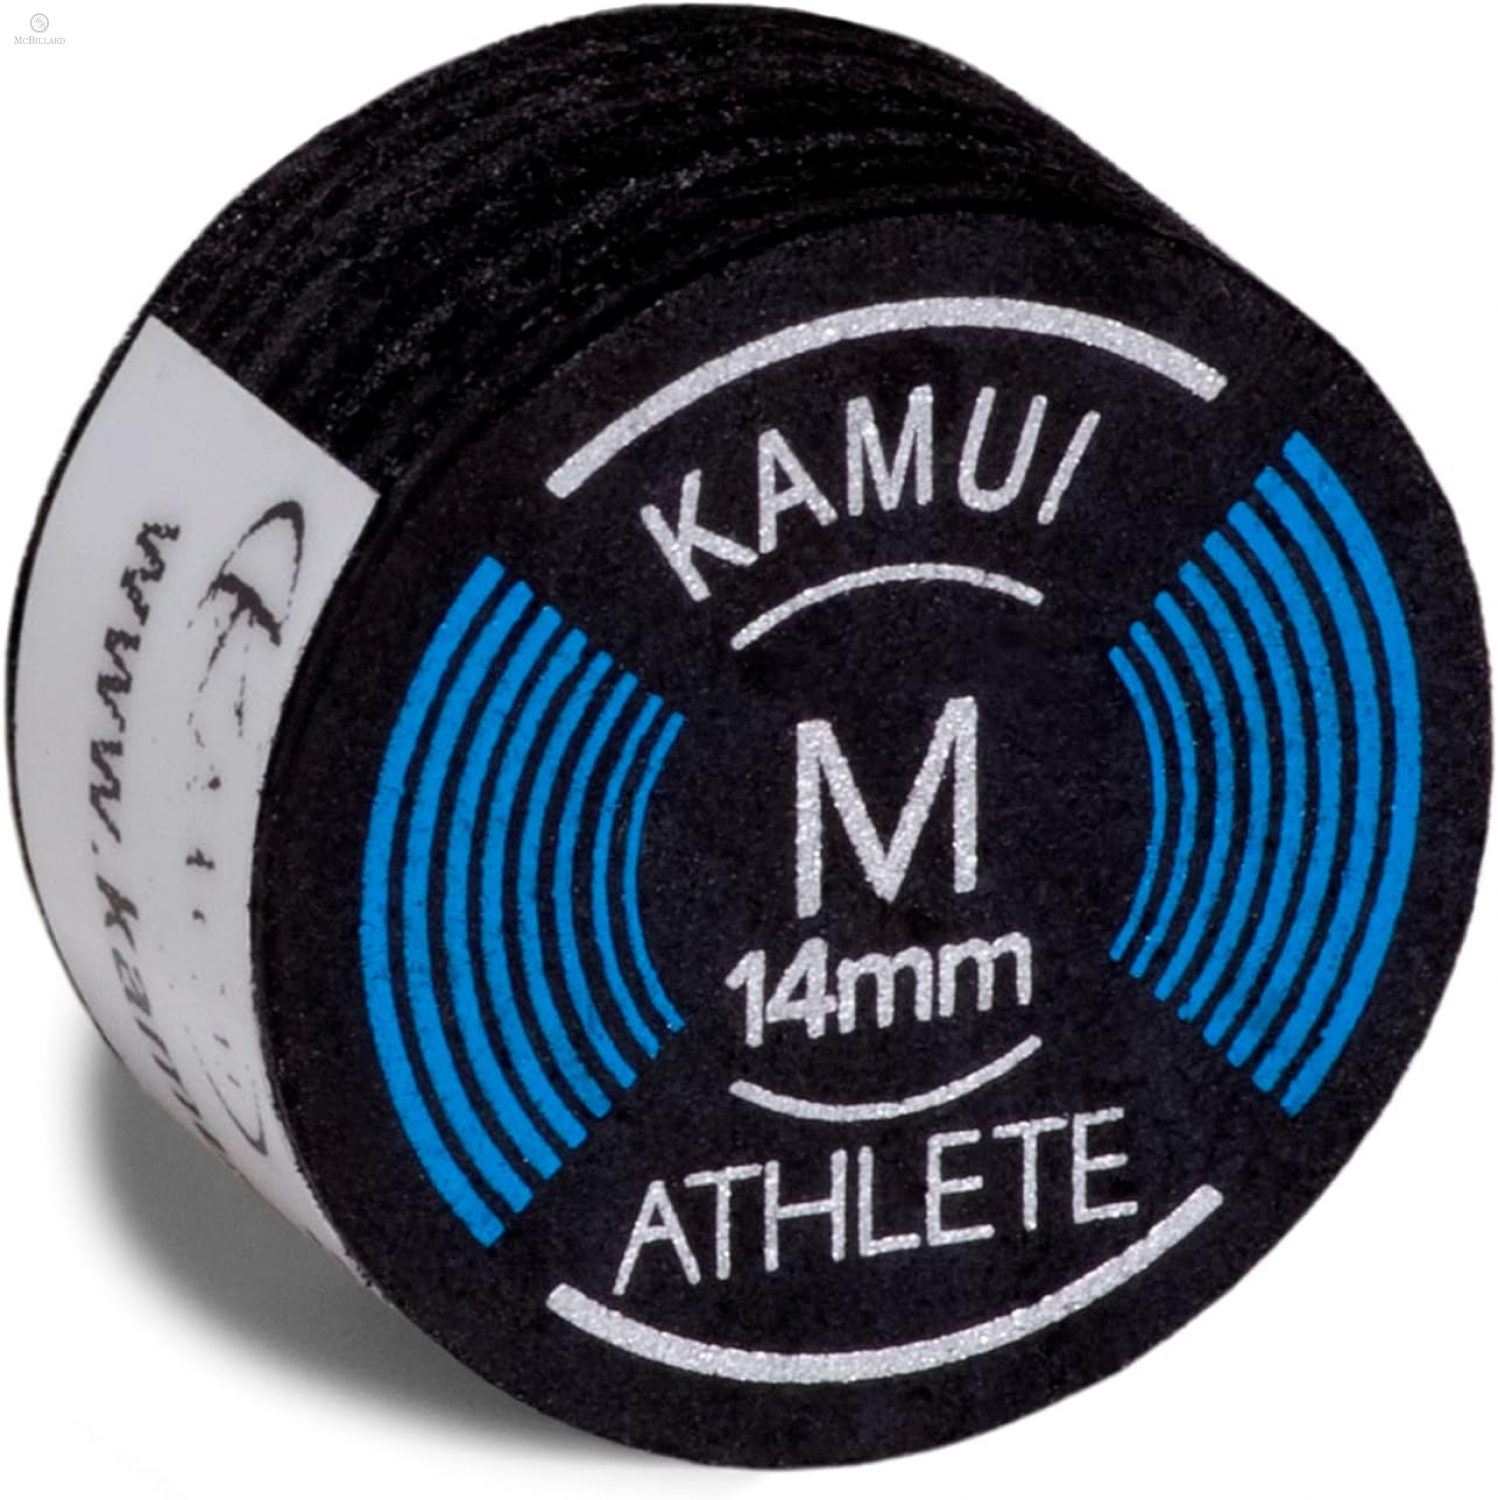 Cue Tip Kamui Multilayer - Athlete M - 14 mm, 1 piece